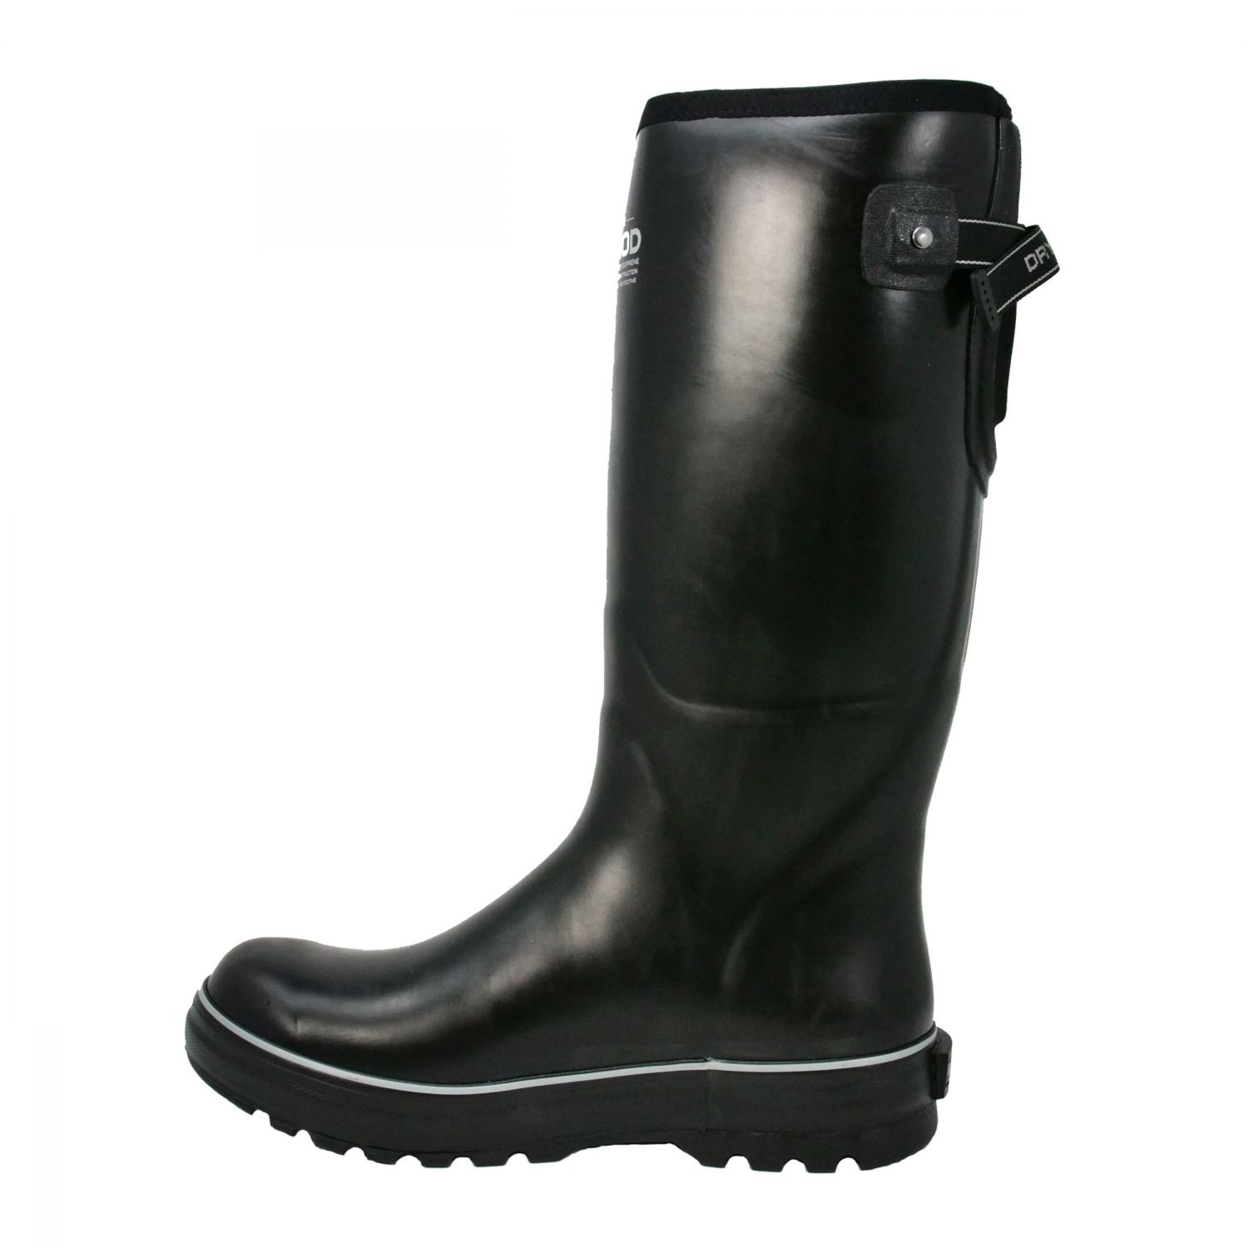 Dryshod Men's Mudslinger Gusset Premium Rubber Farm Boots Black/Grey - MDG-MH-BK ONE SIZE BLACK/GREY - BLACK/GREY, 11